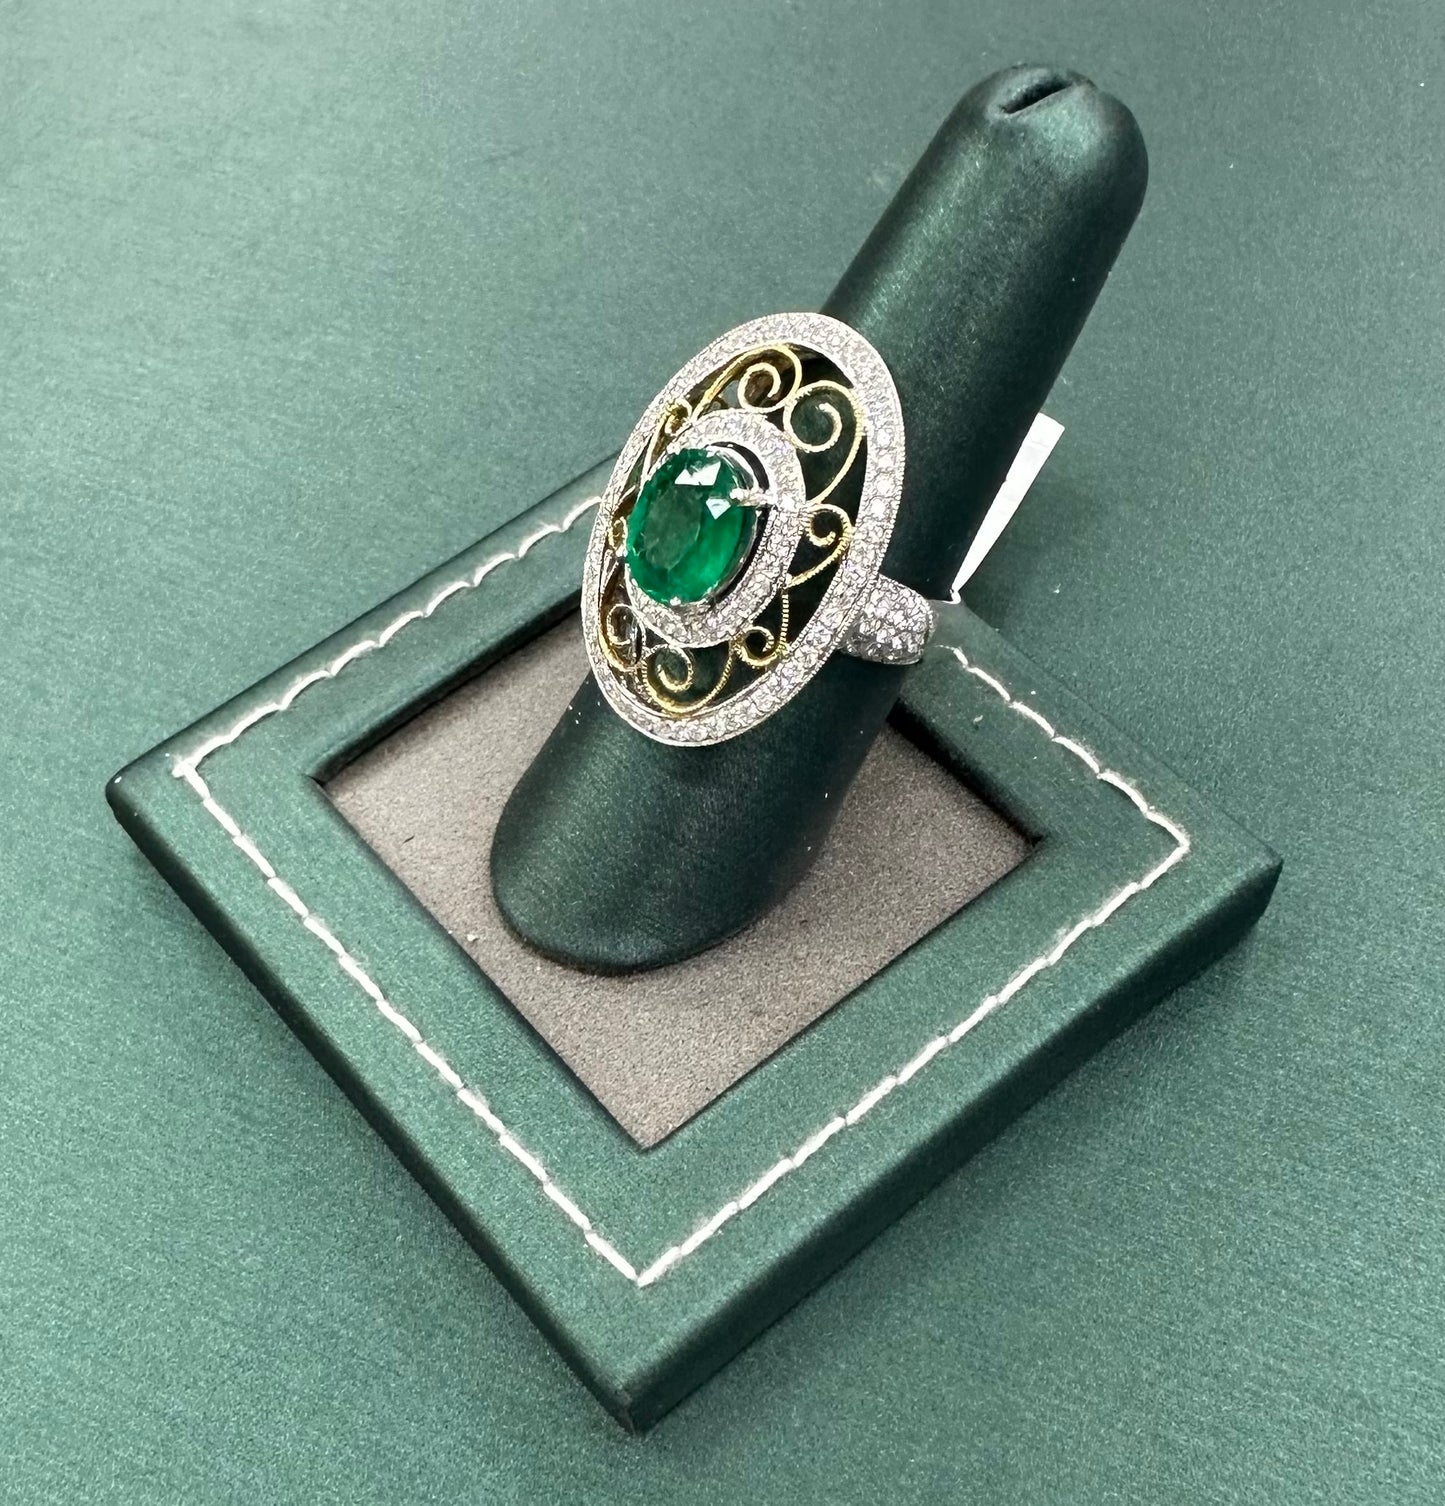 The heaven halo emerald and diamond ring